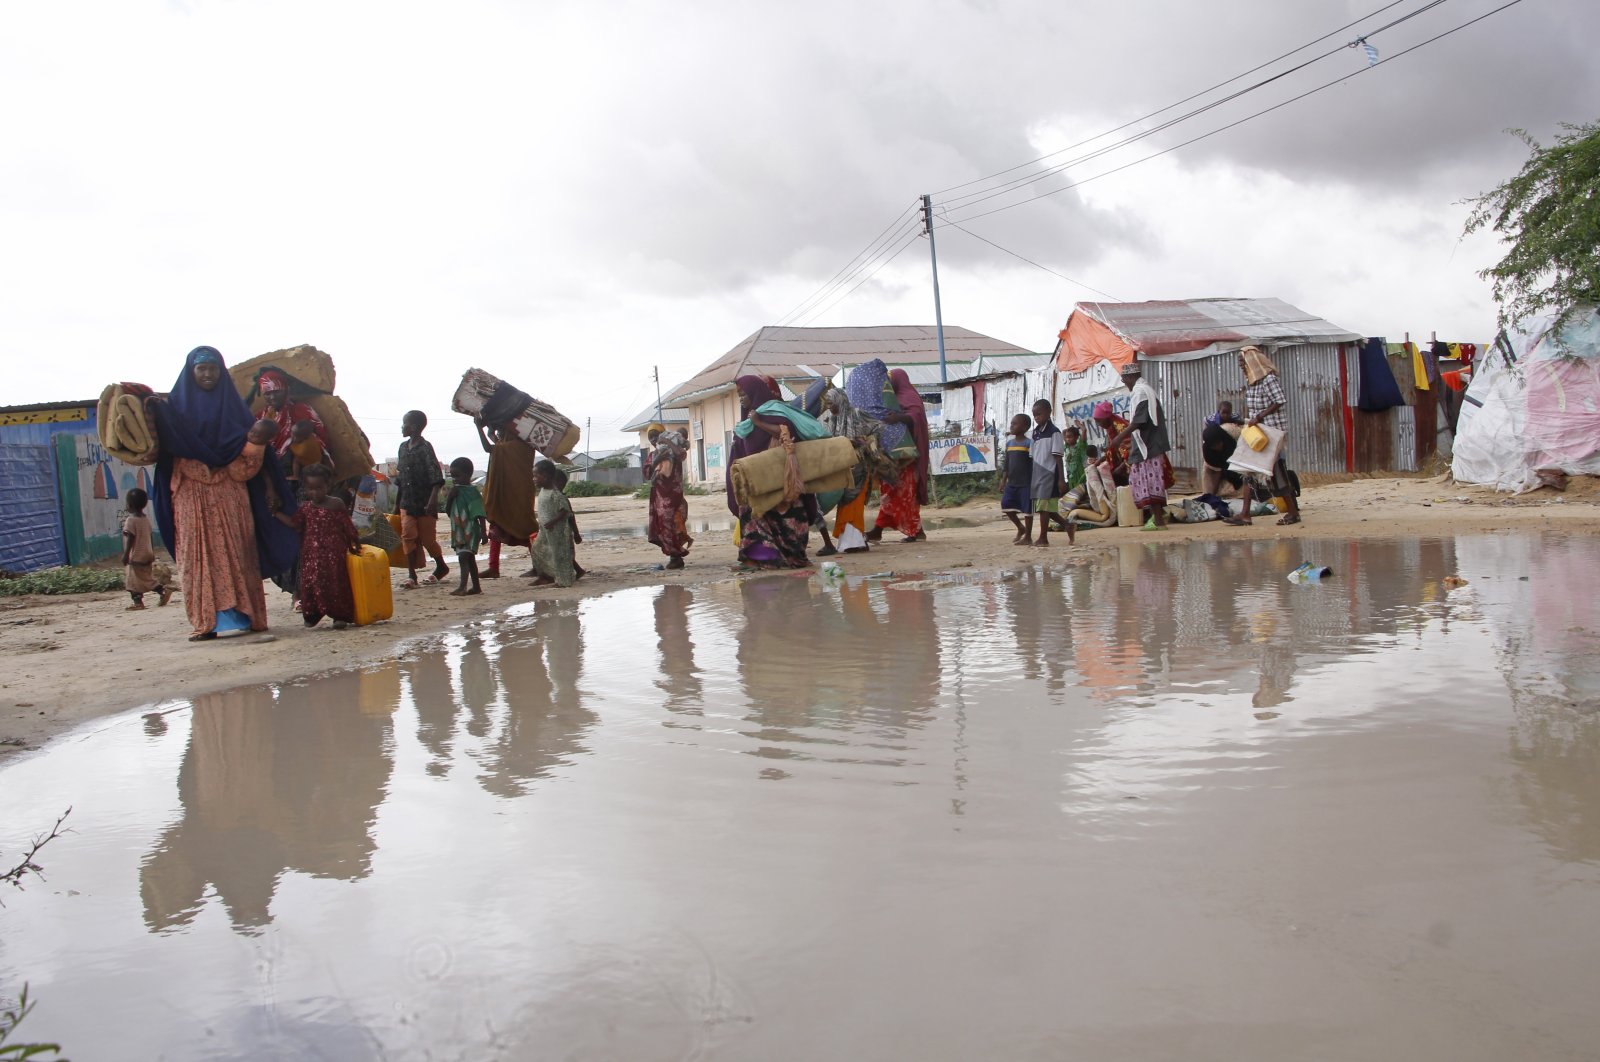 Türkiye delivers 2nd batch of aid to flood-hit Somalia | Daily Sabah - Daily Sabah